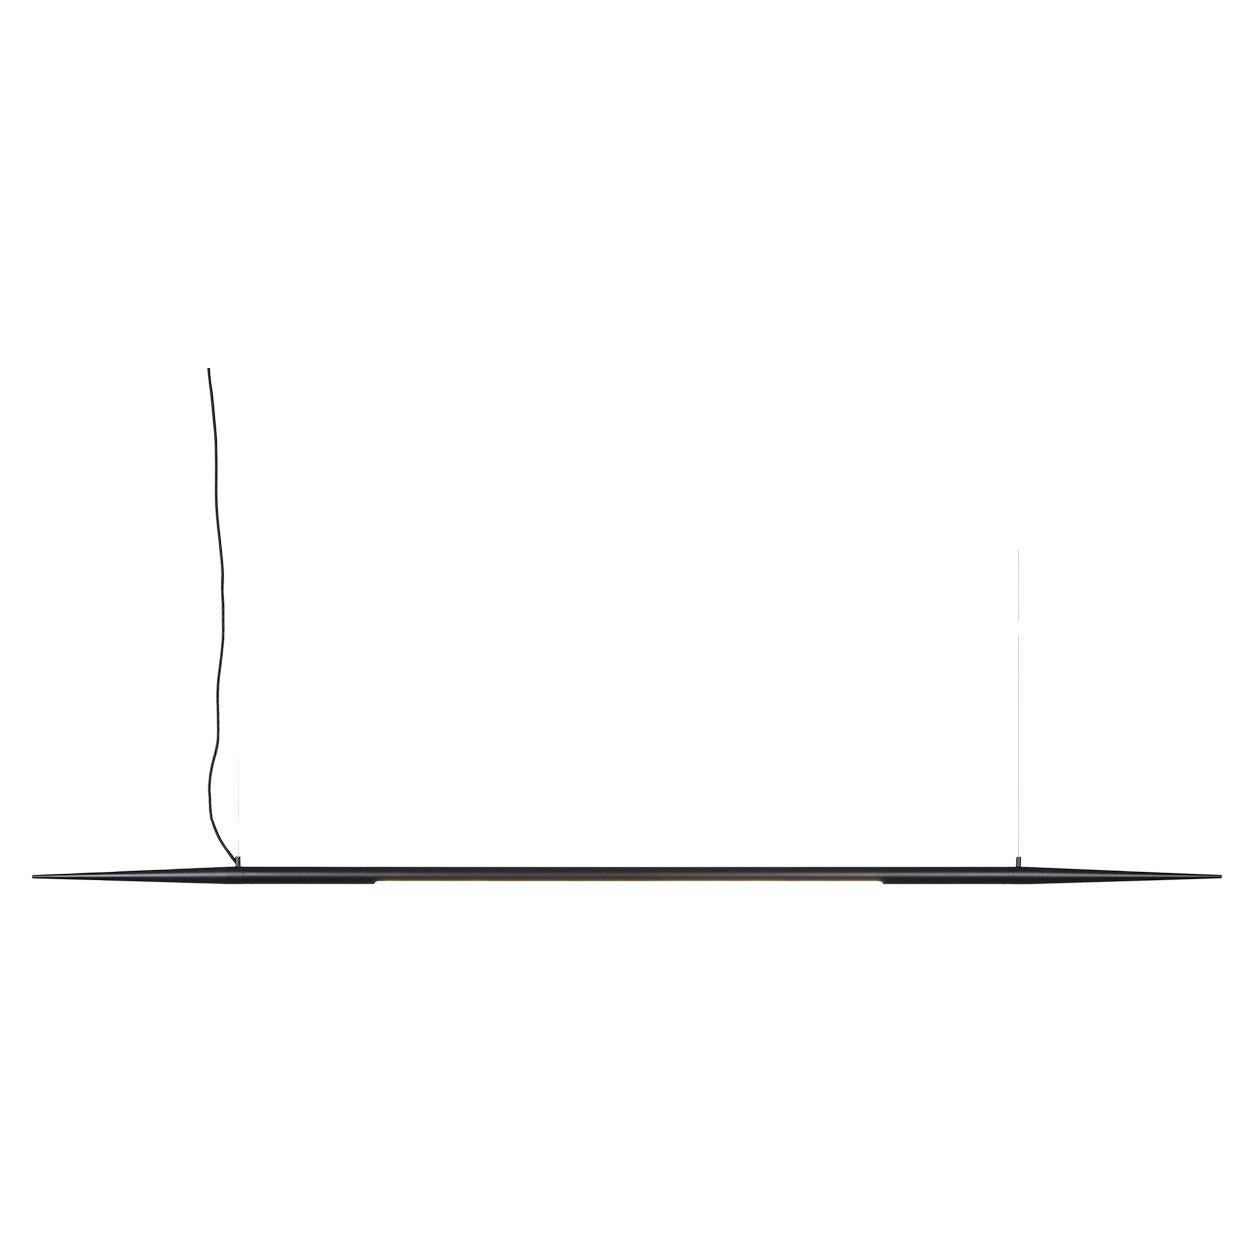 Ferrão Pendant Lamp, 210cm, by RAIN, Contemporary Lamp, Aluminium, Black For Sale